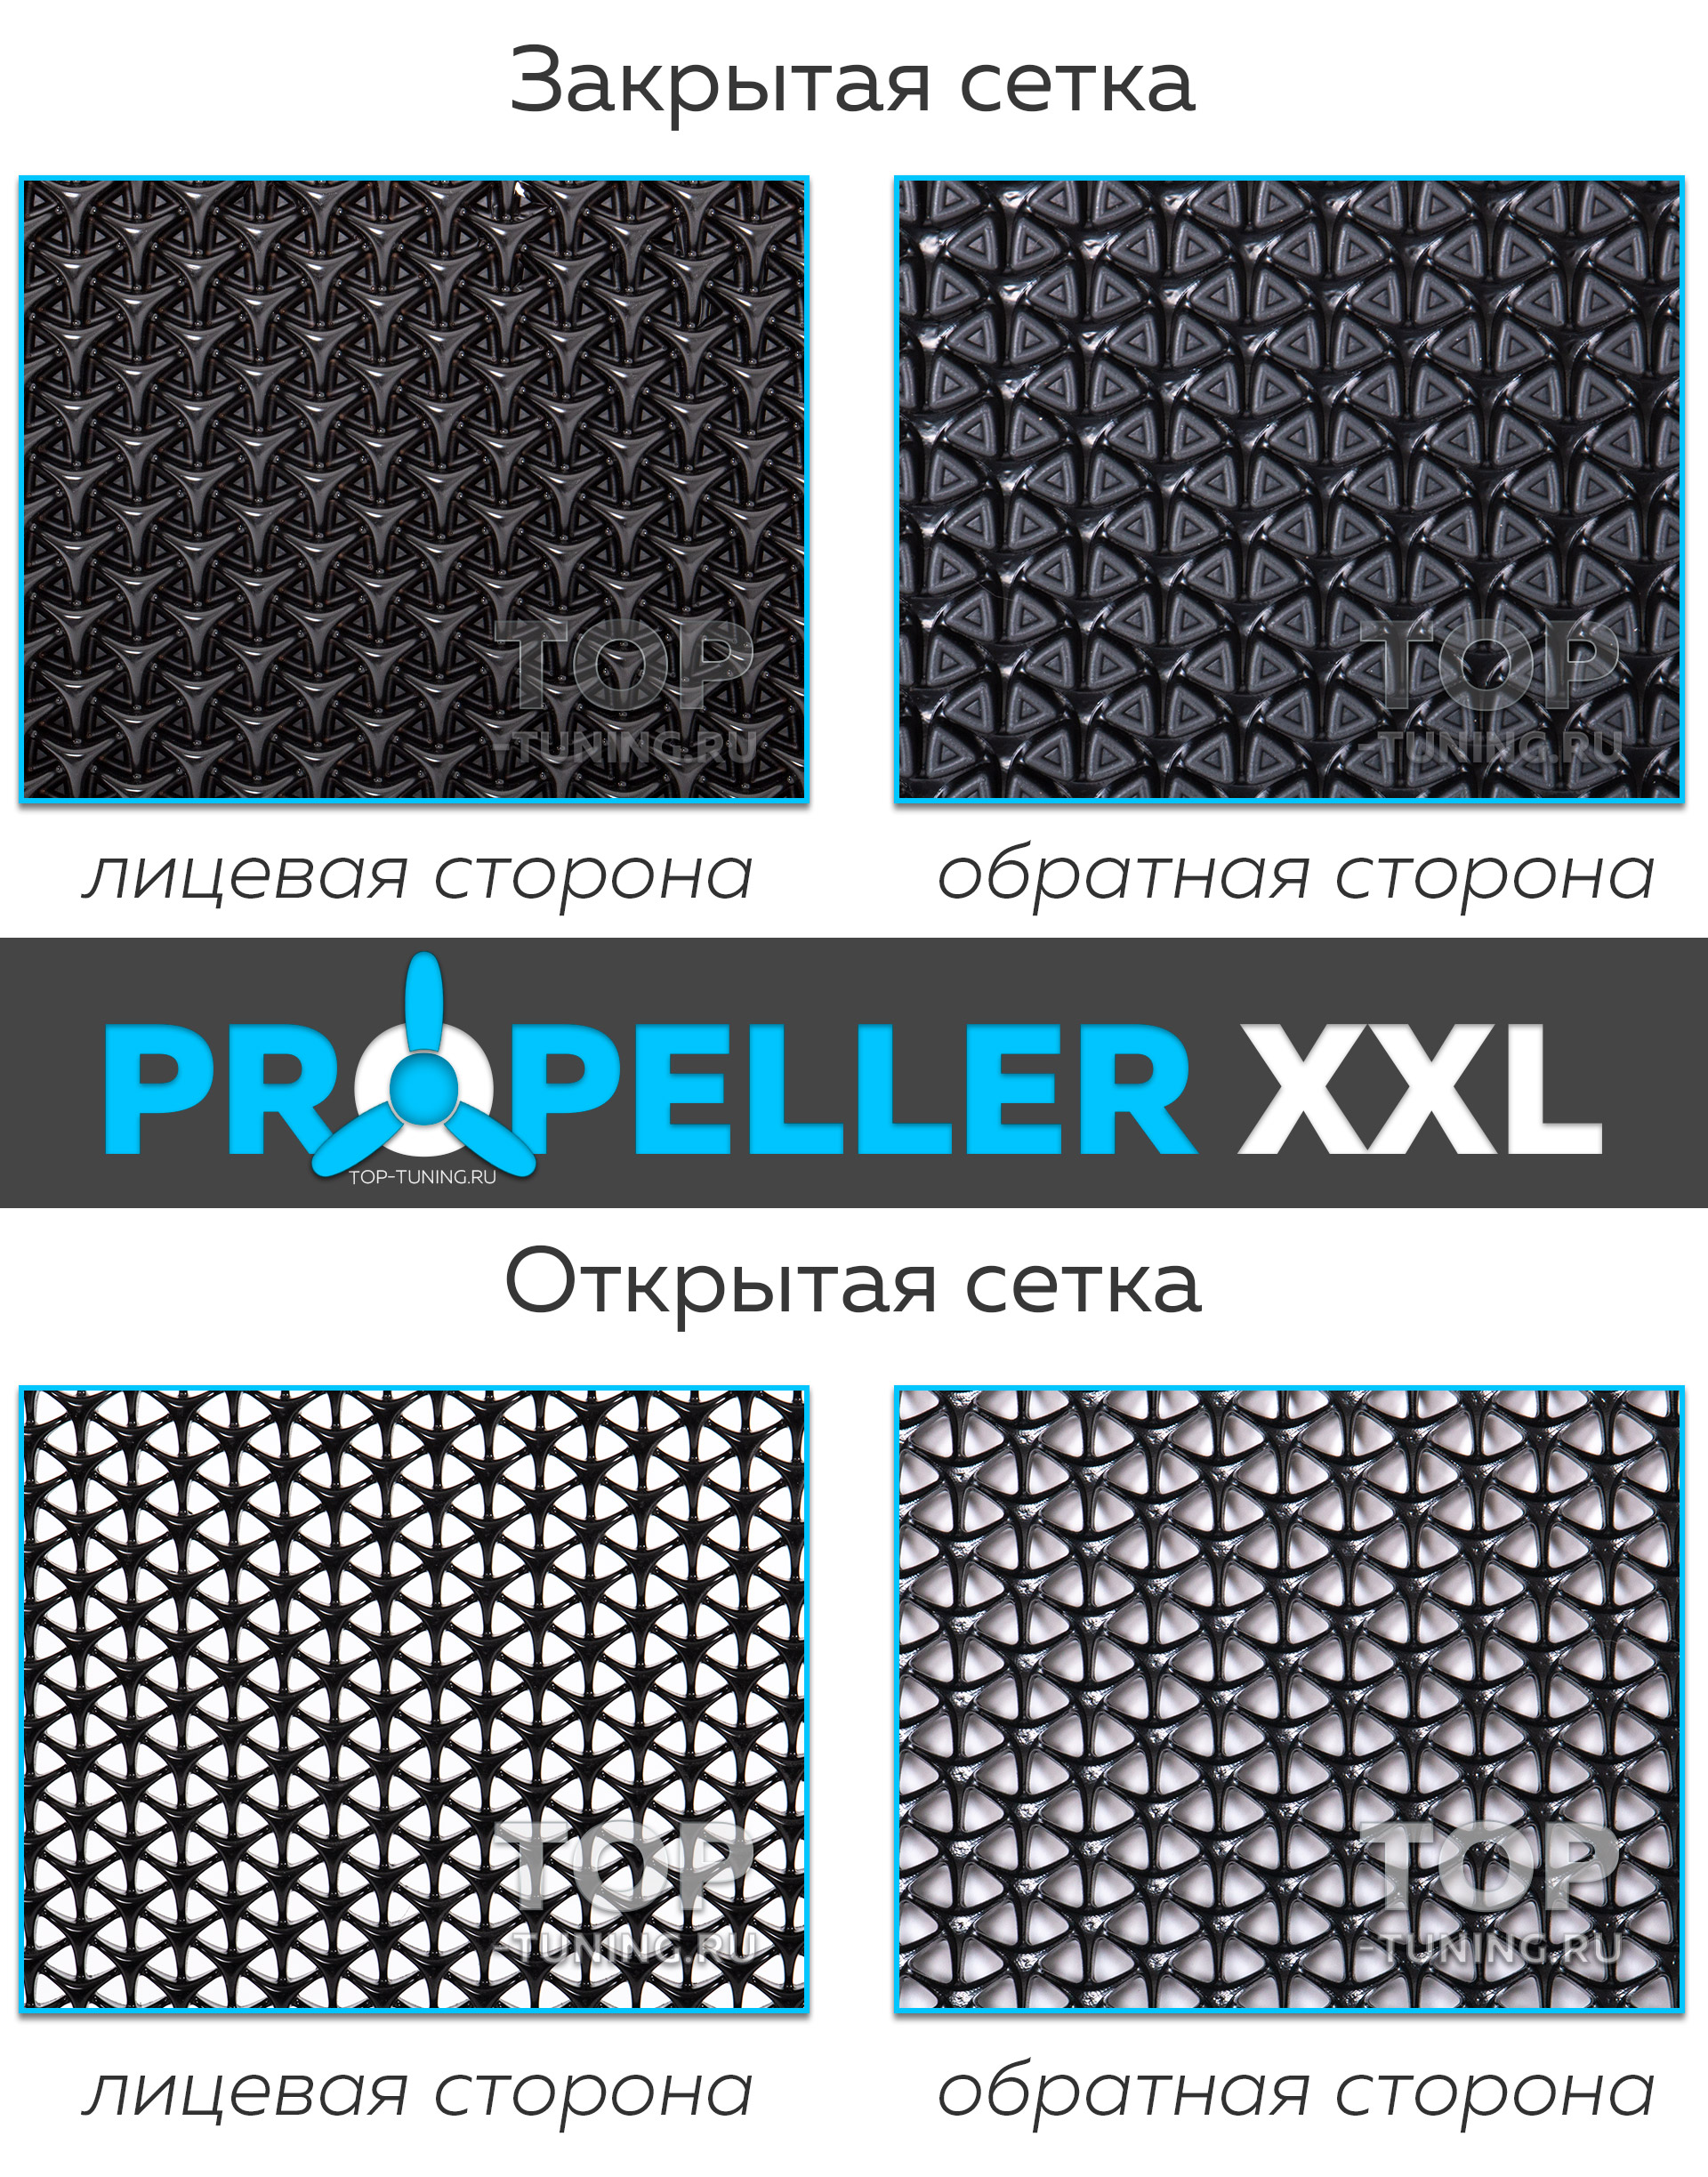 11950 Пластиковая тюнинг сетка Propeller XXL 121,5 x 70,5